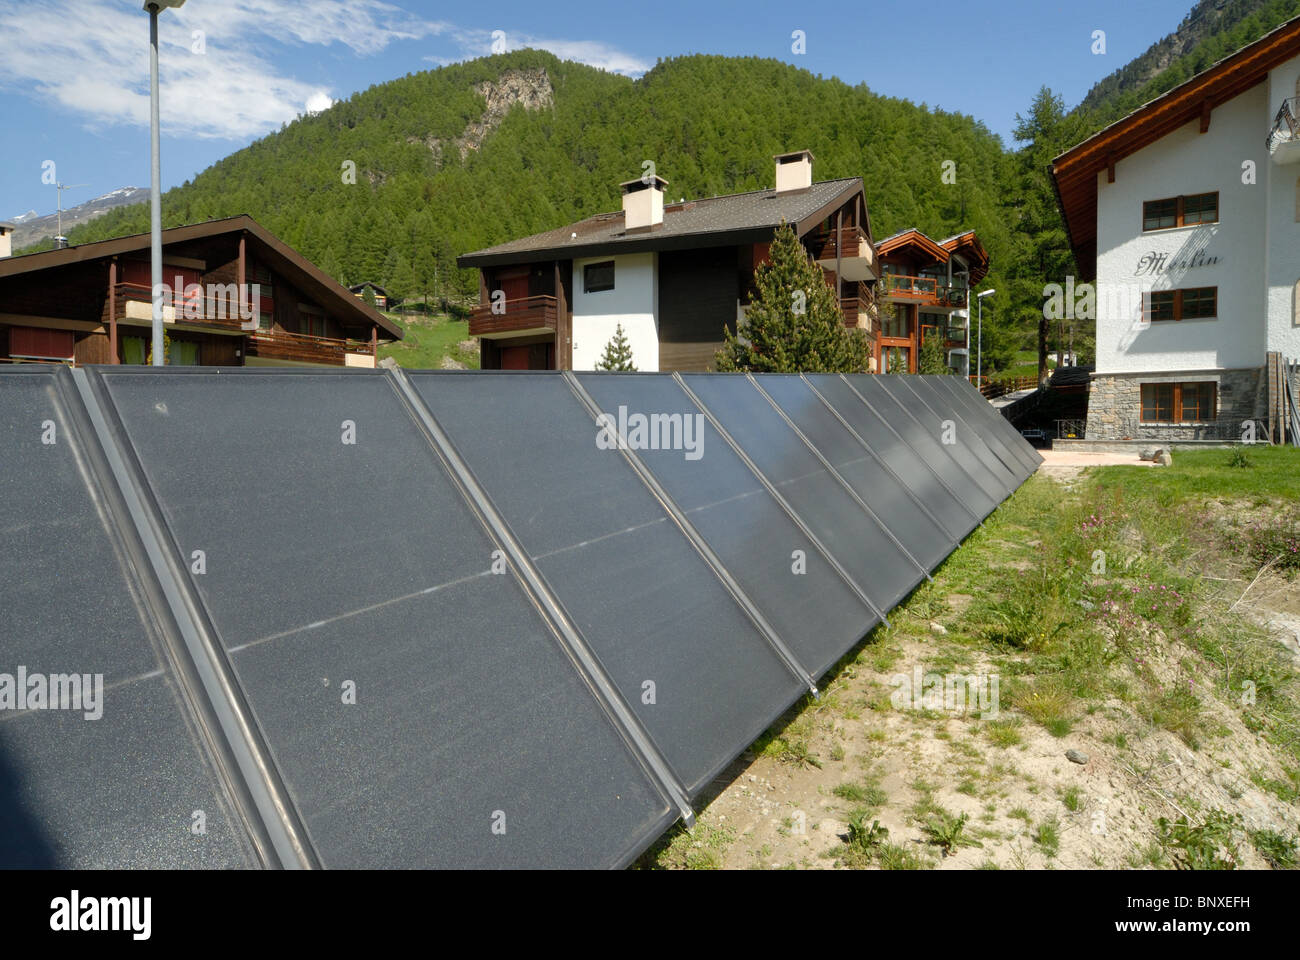 Solar Hot water panels supply hot water to a guest house in Zermatt, Switzerland Stock Photo